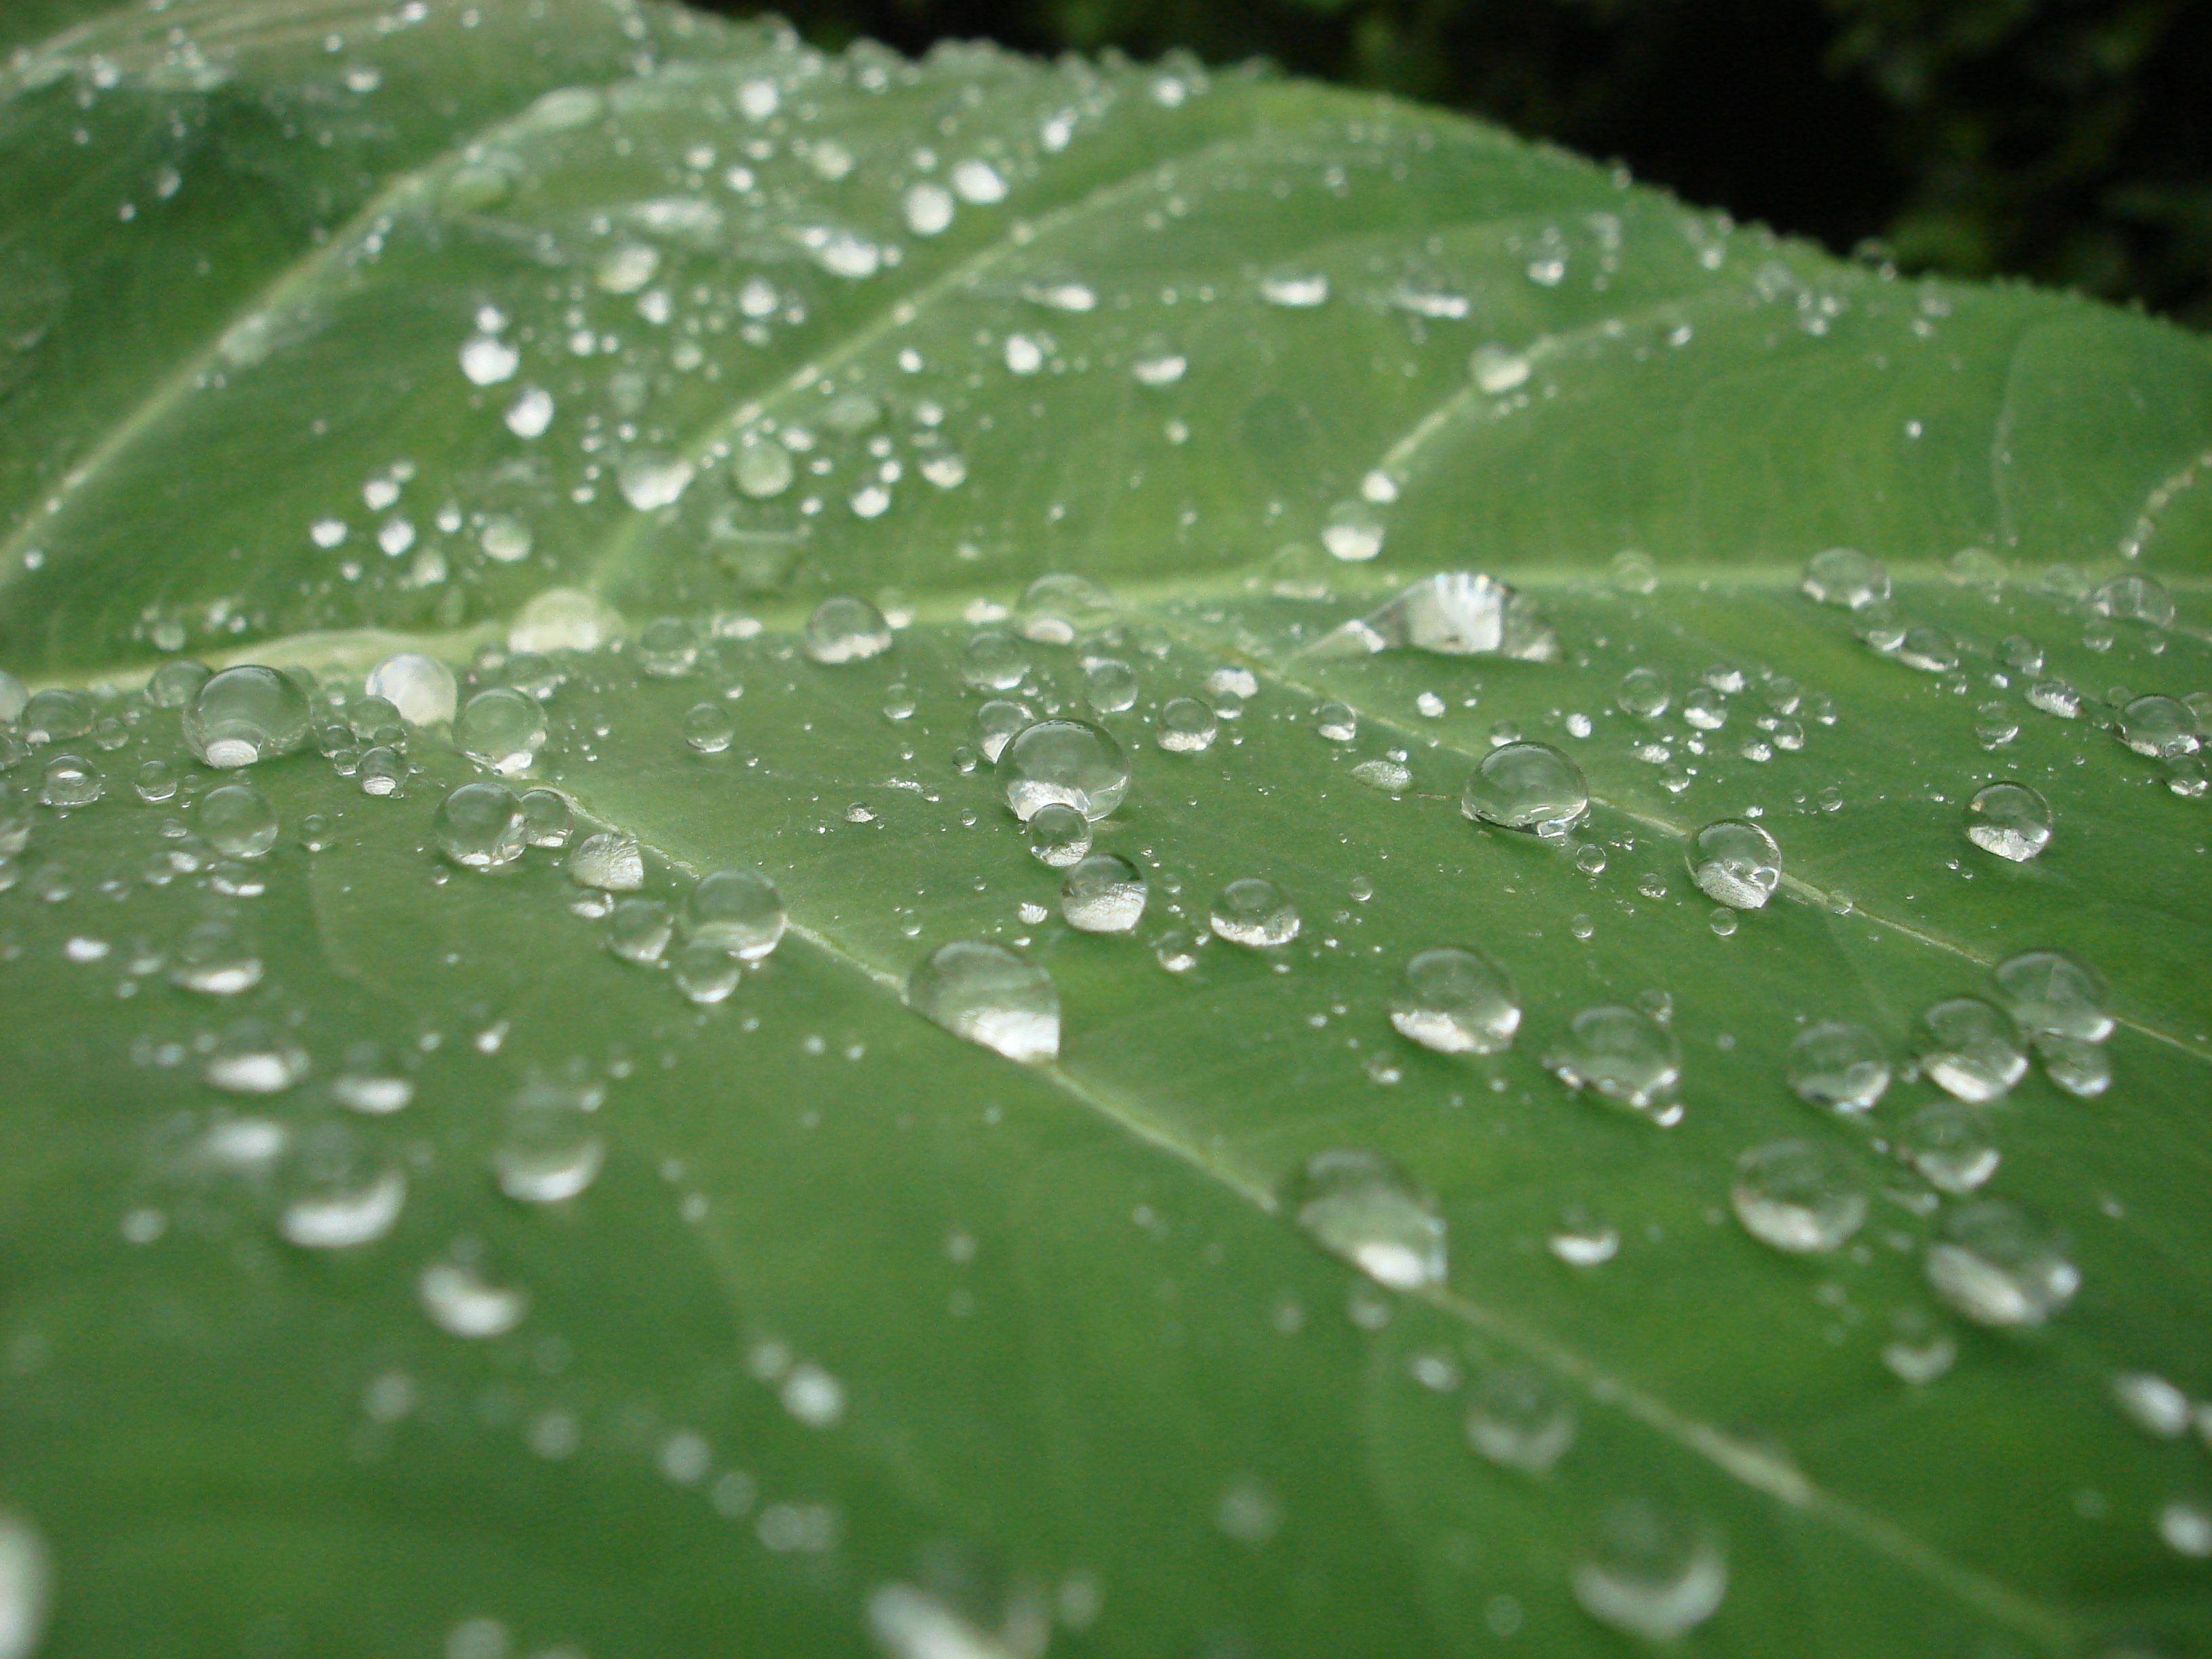 File:Water droplets on leaf.jpg - Wikimedia Commons